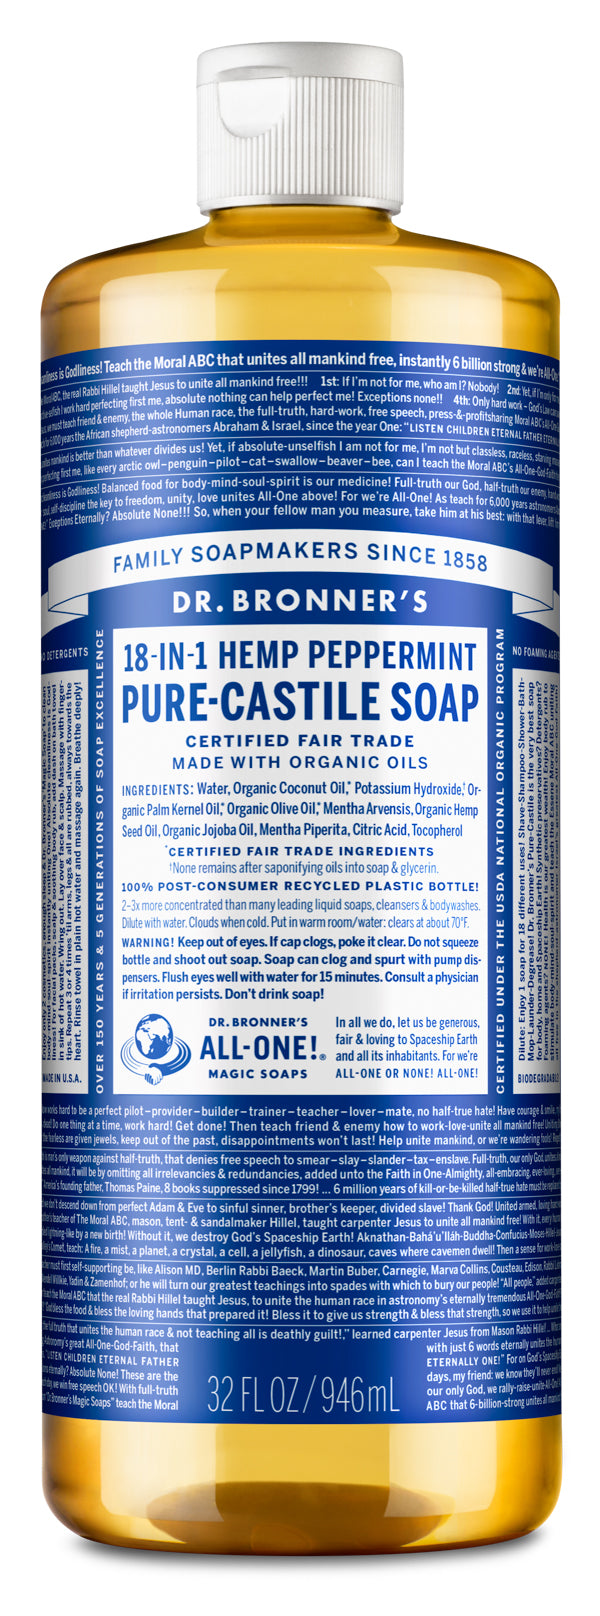 Dr. Bronner’s 18-In-1 Hemp Peppermint Pure-Castile Soap